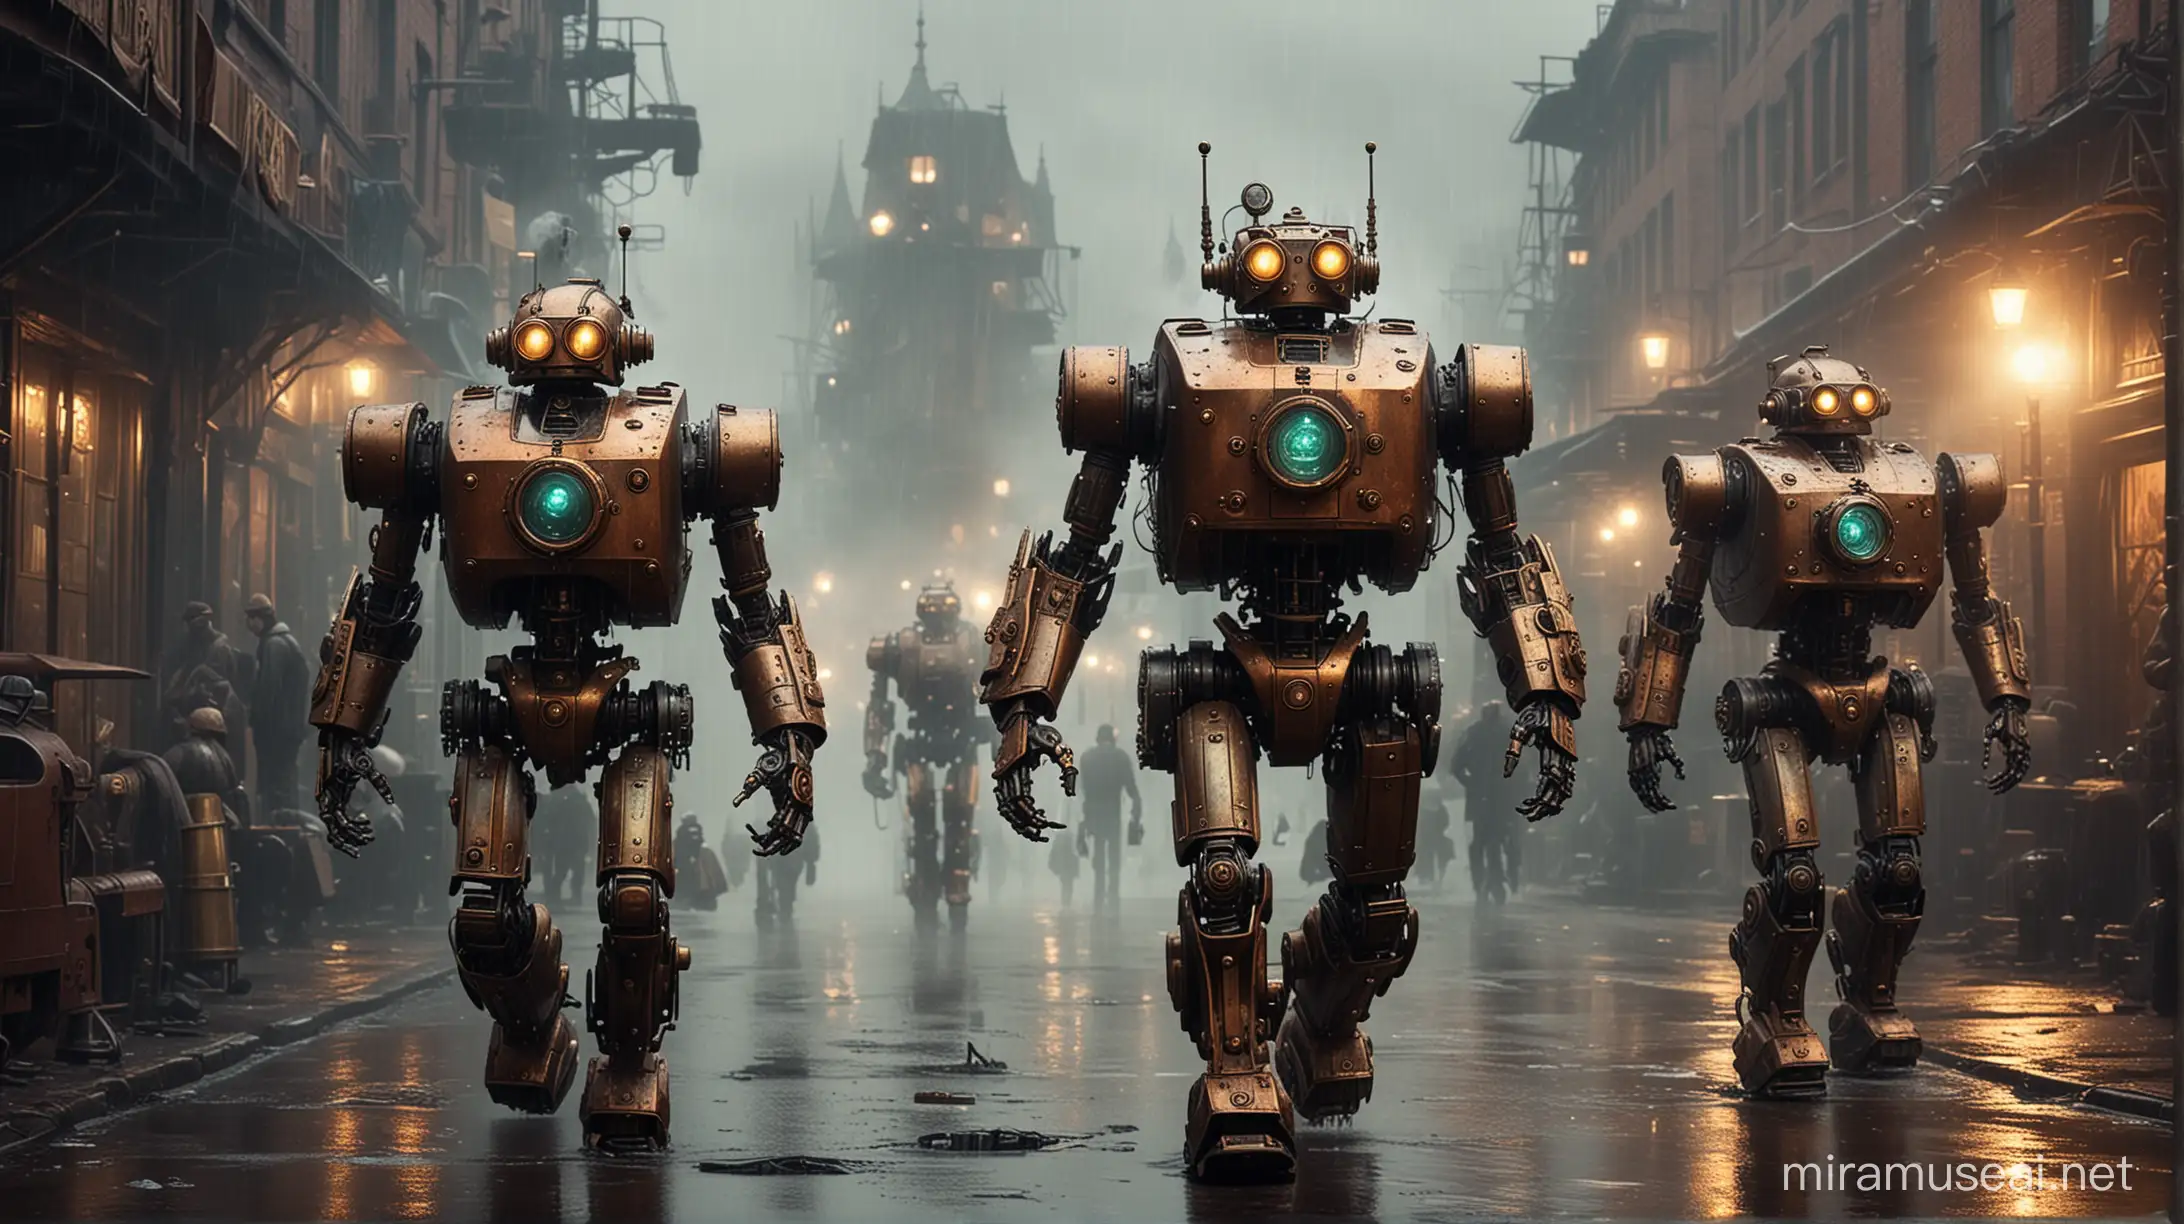 Steampunk Robot Army Invades Dark Rainy Cityscape